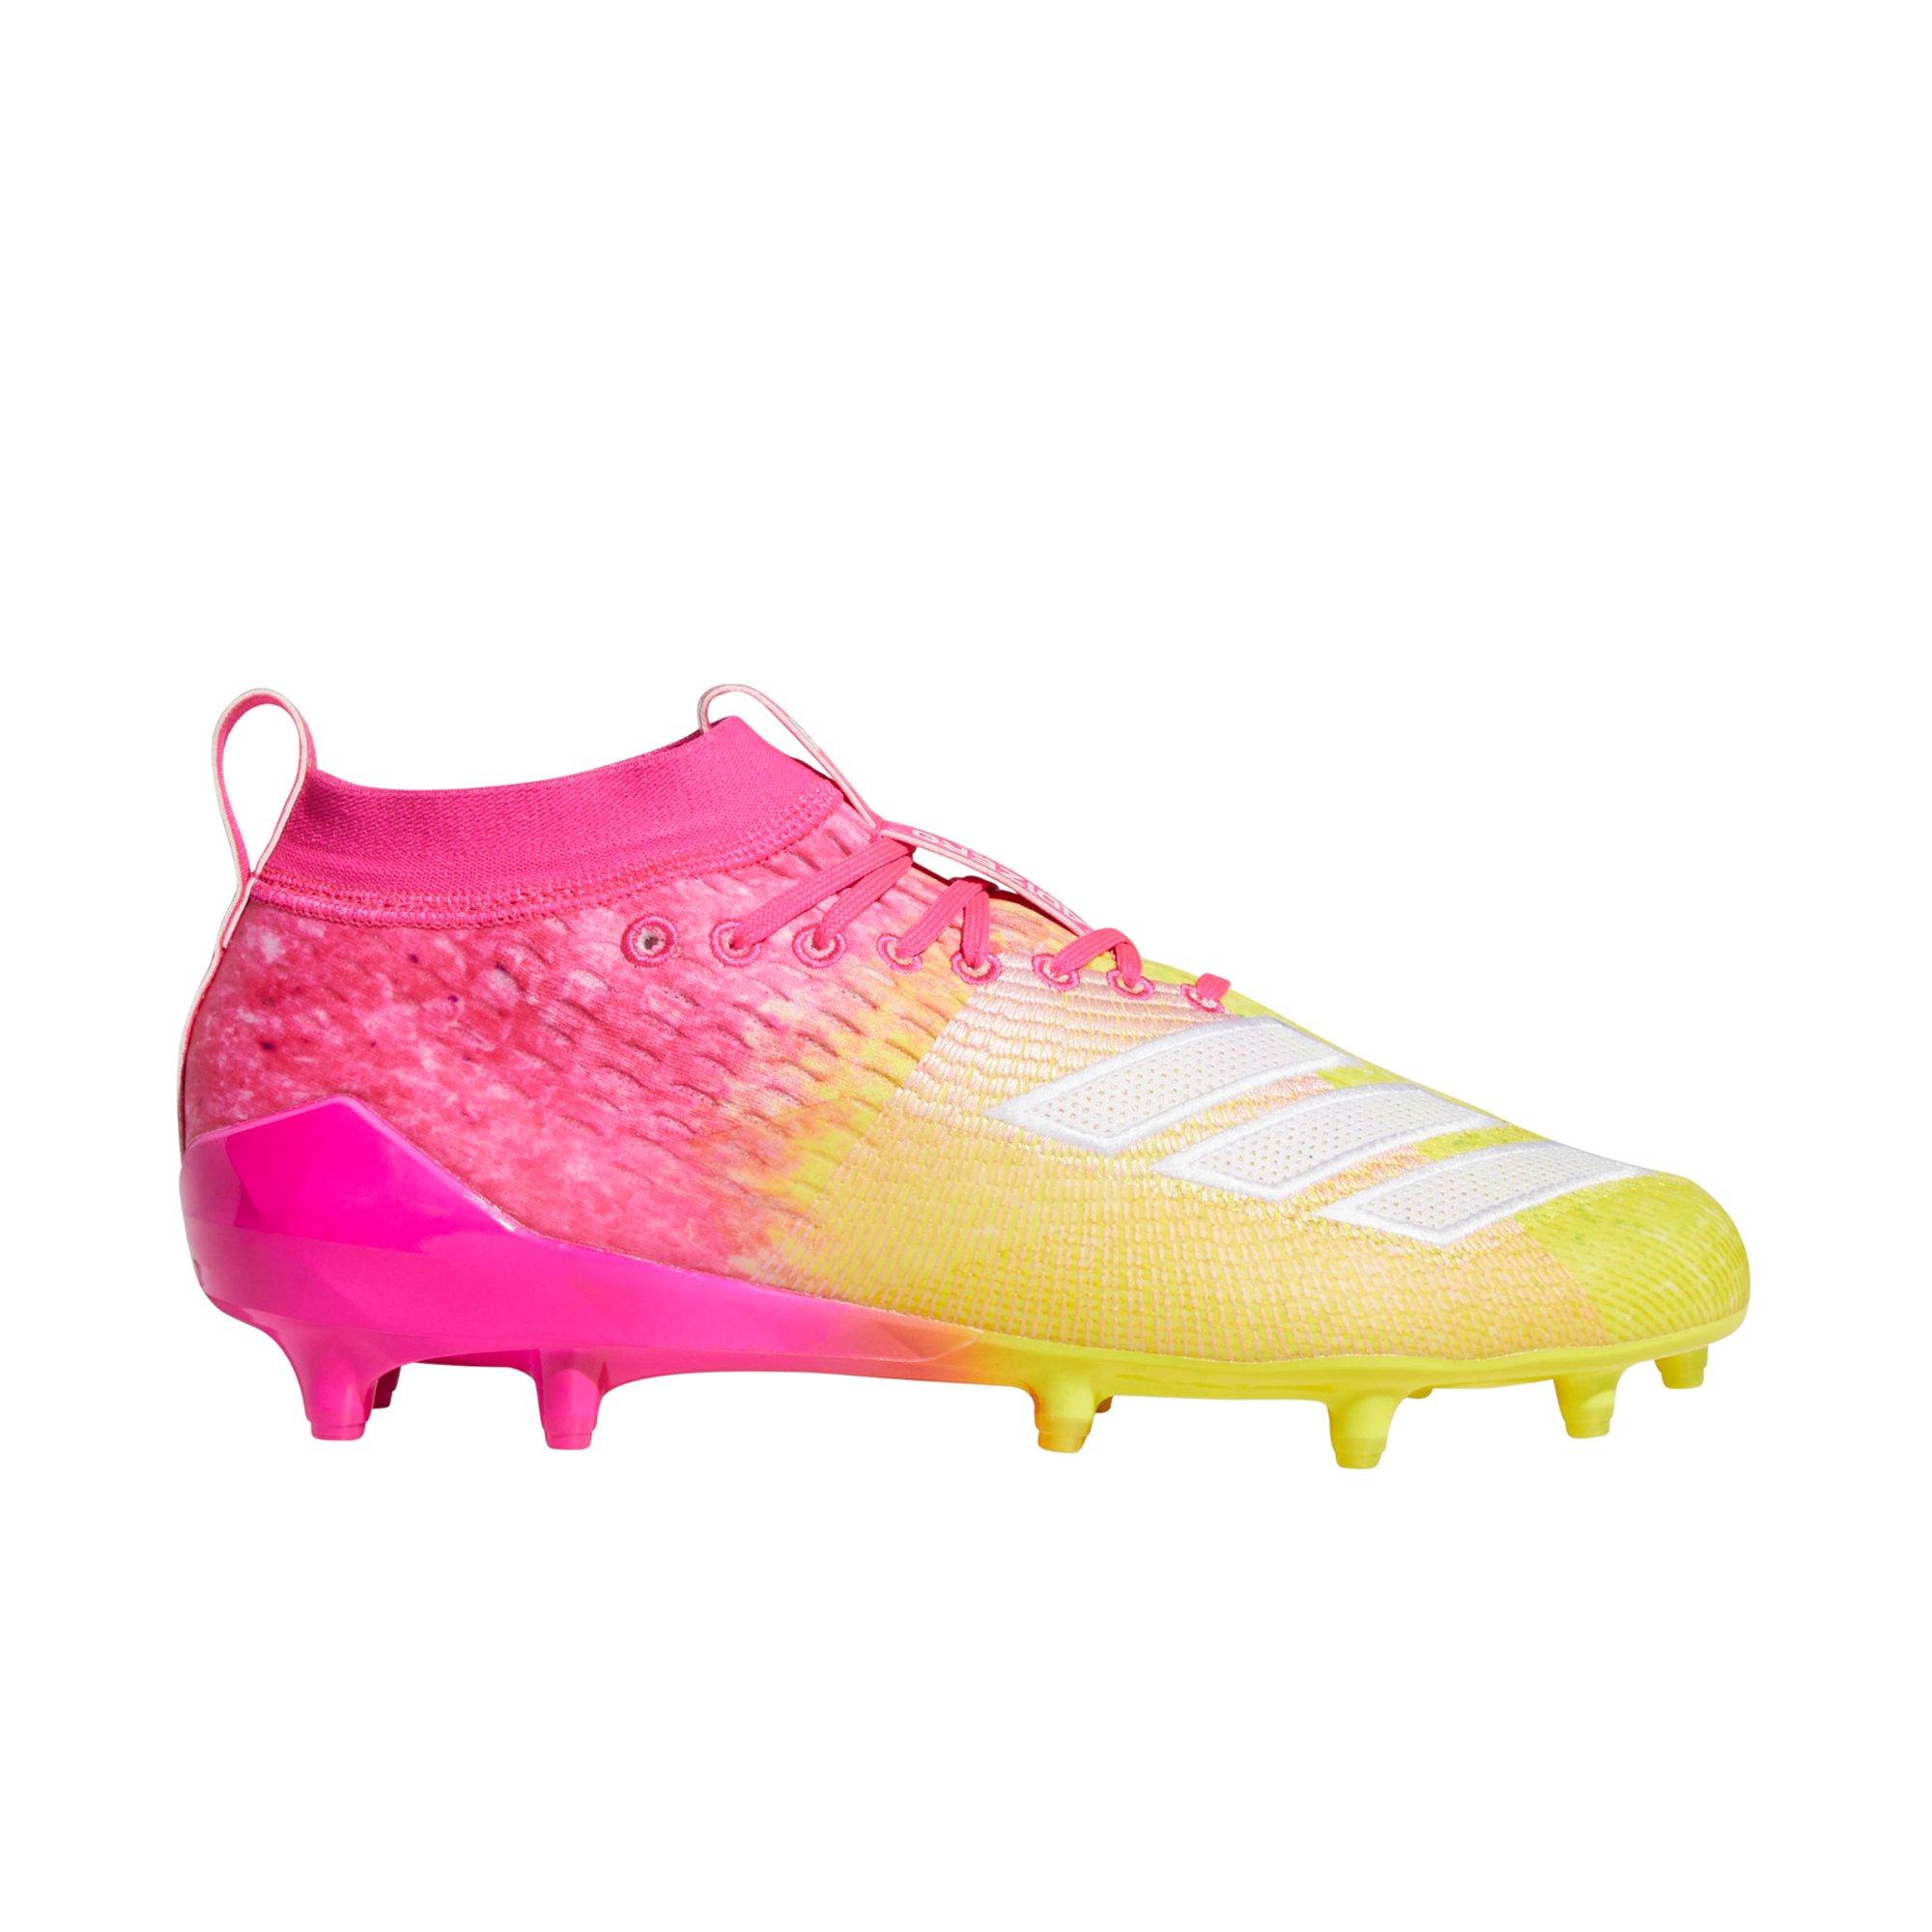 salmon pink adidas football boots